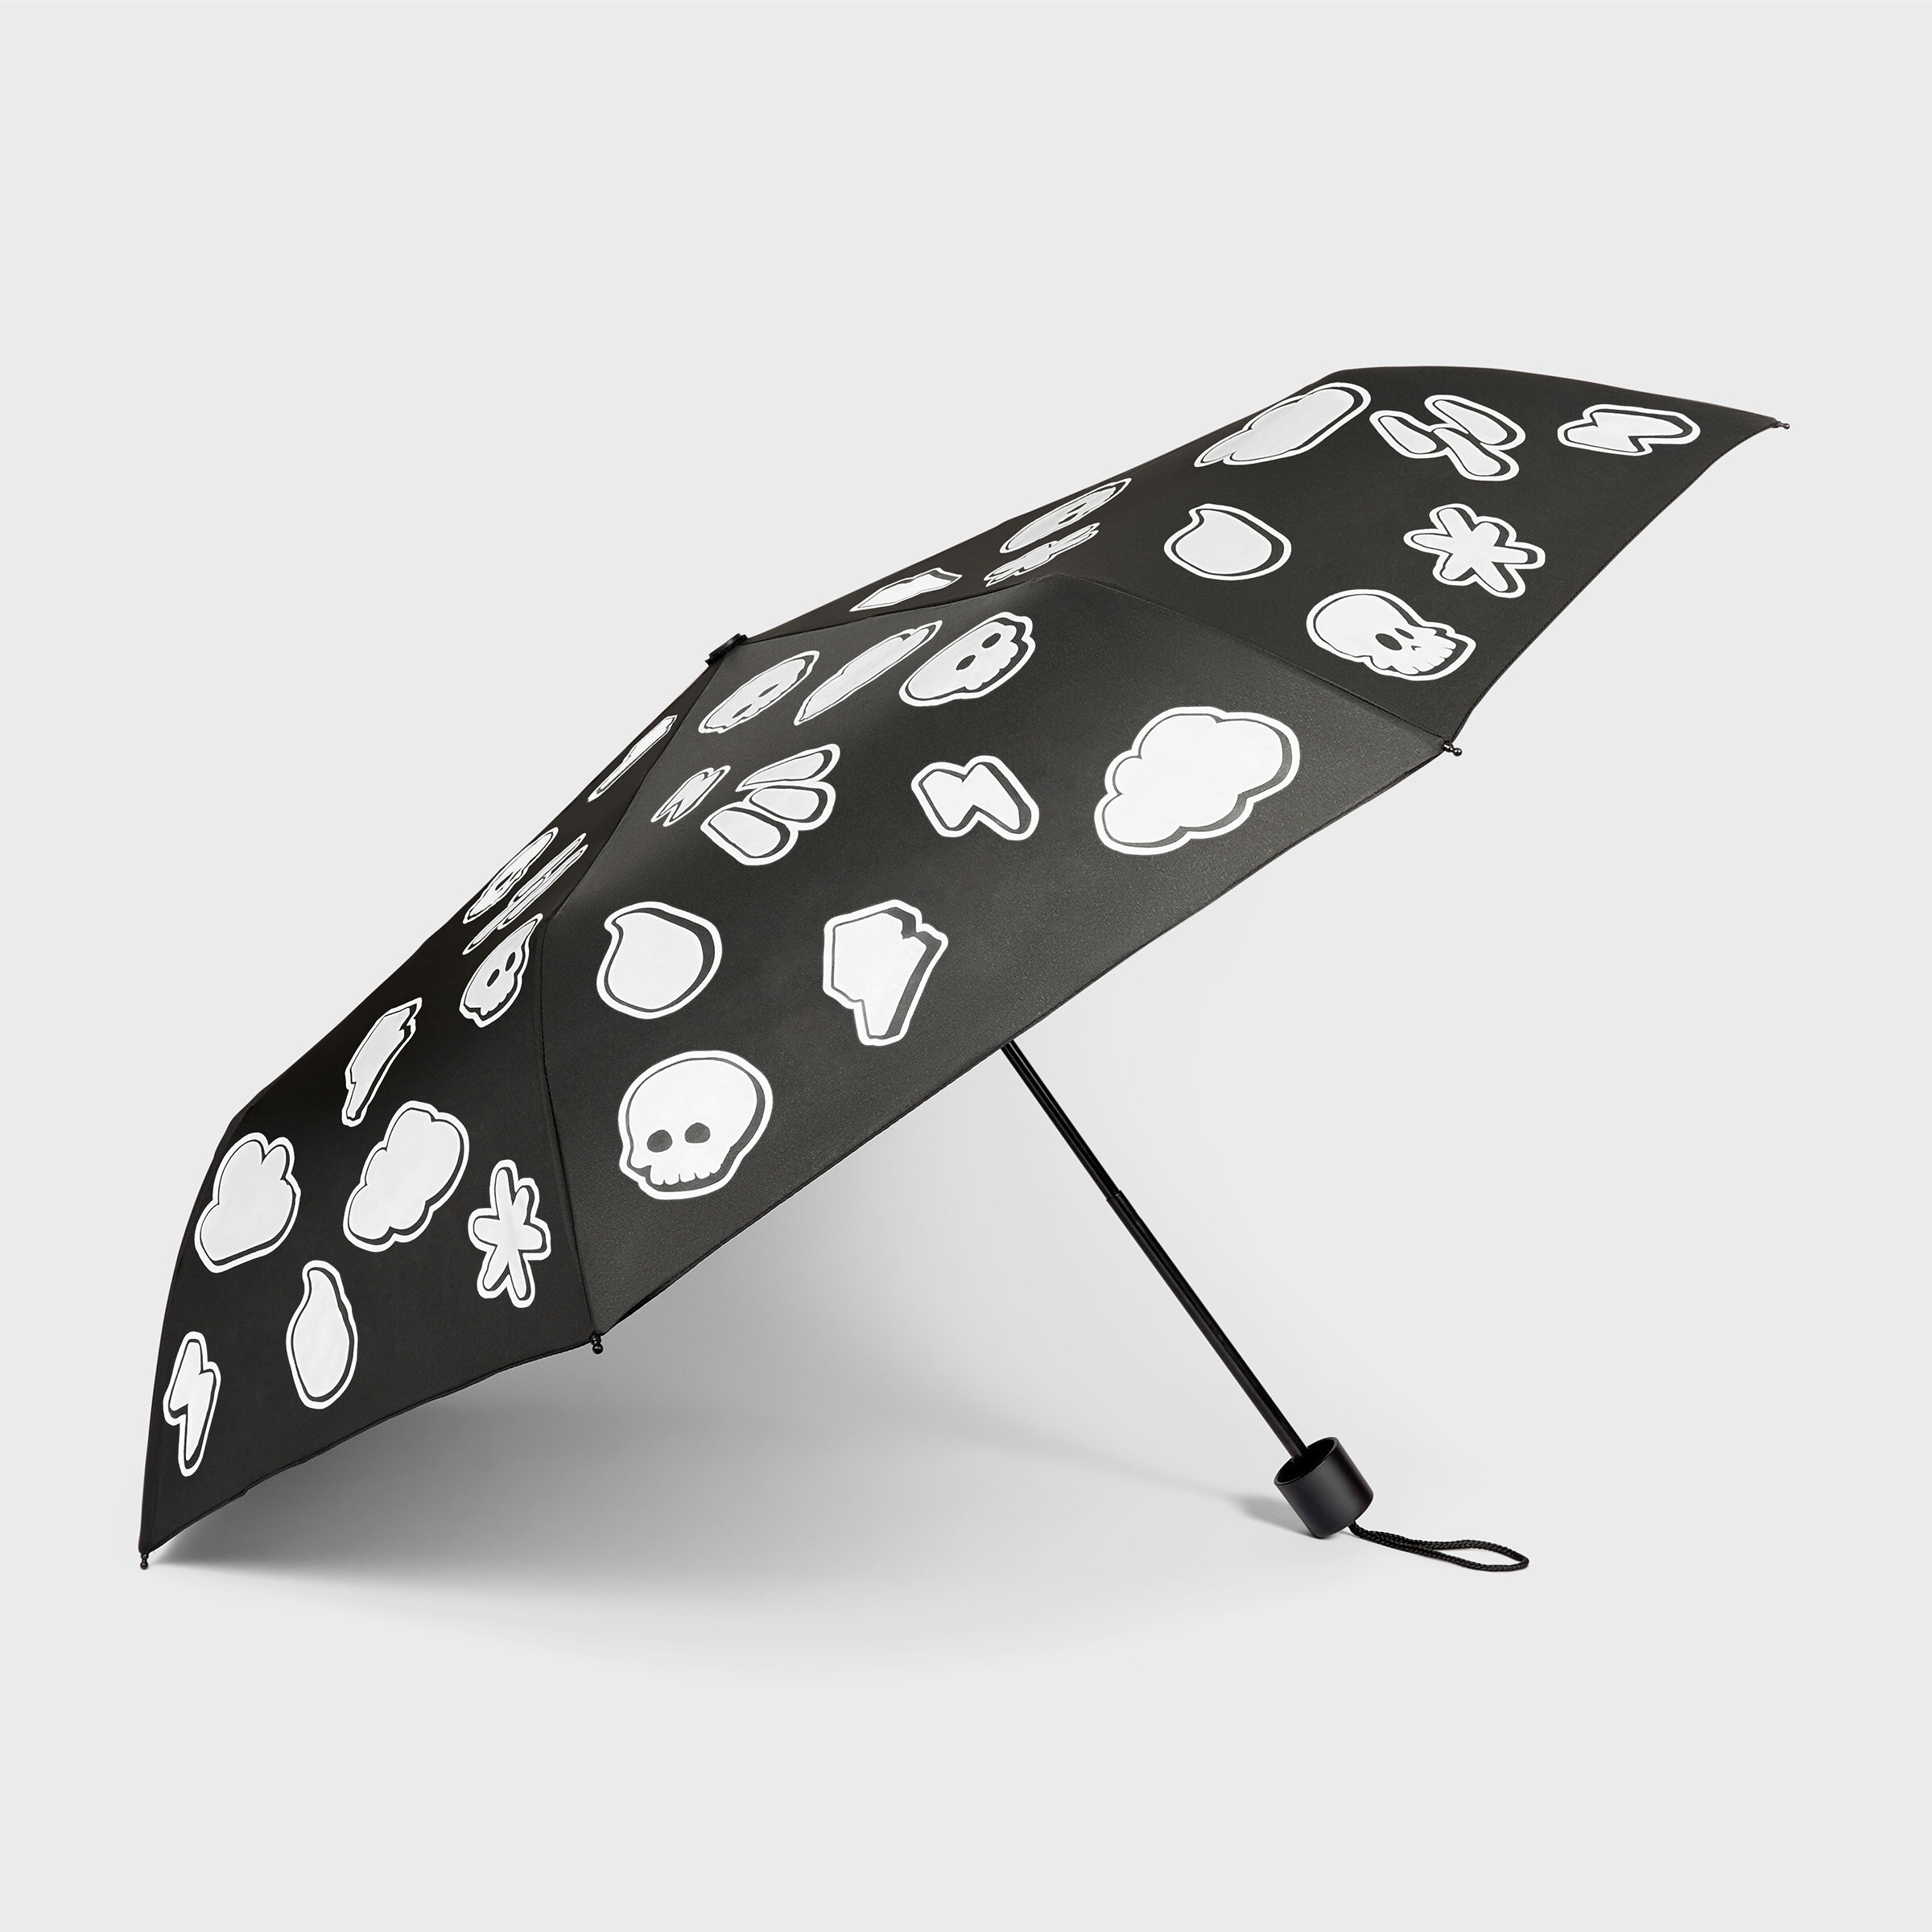 Weather Pattern Umbrella